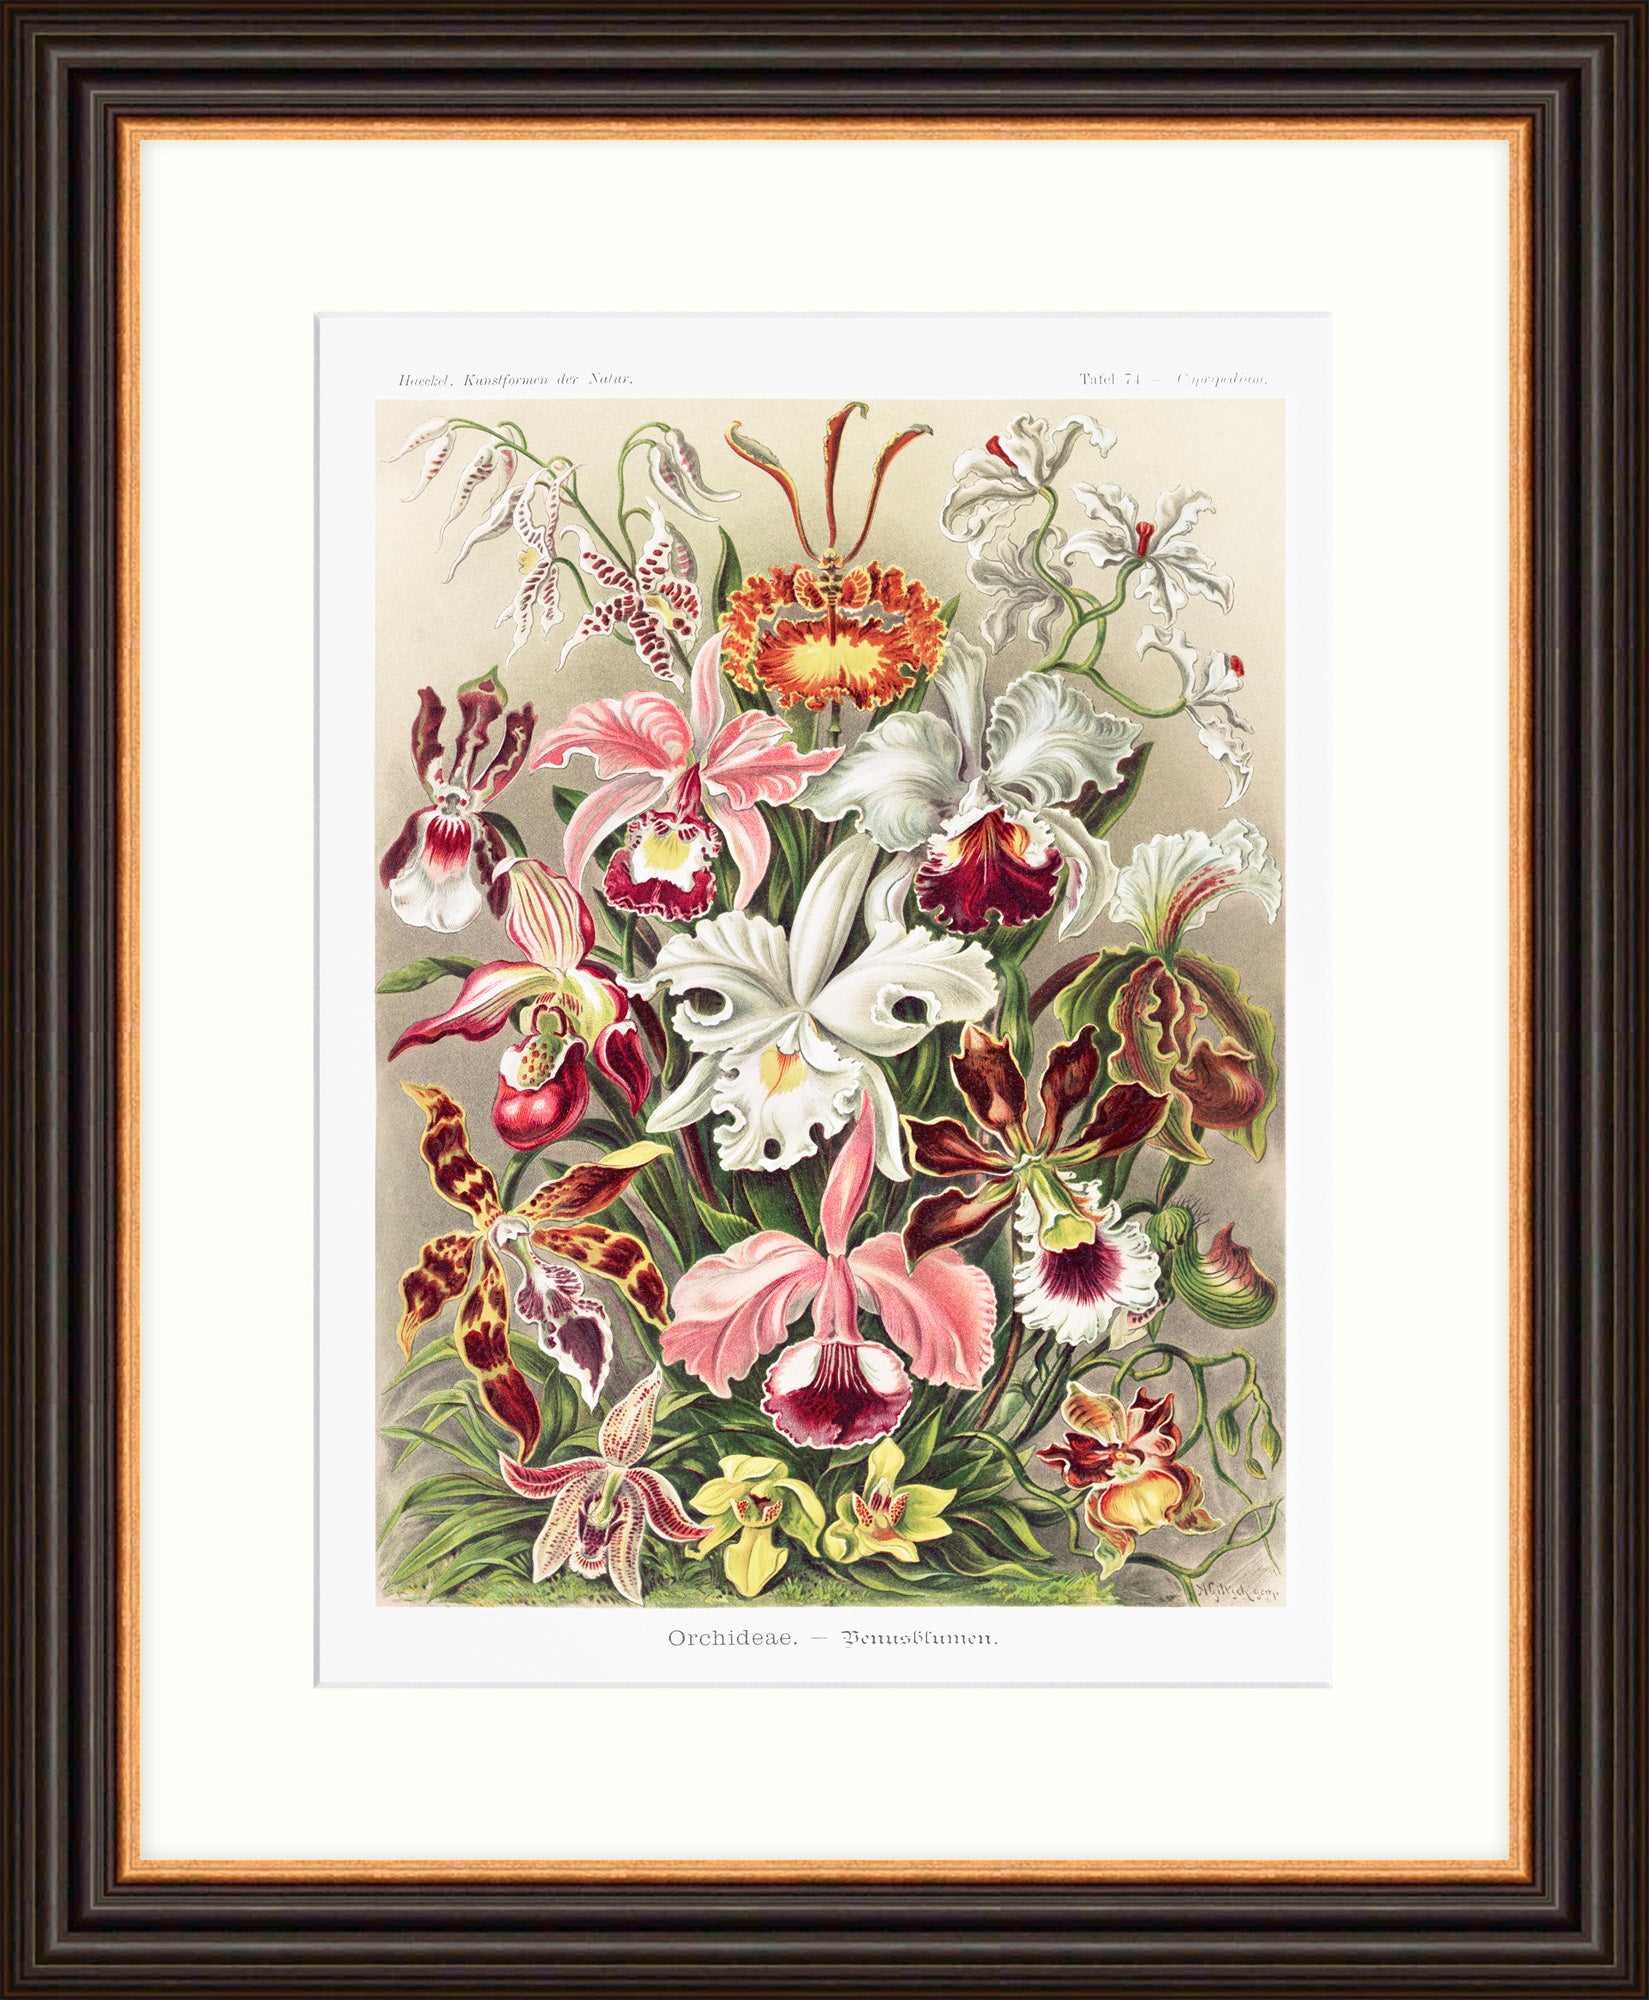 'Orchideae' - Ernest Haeckel